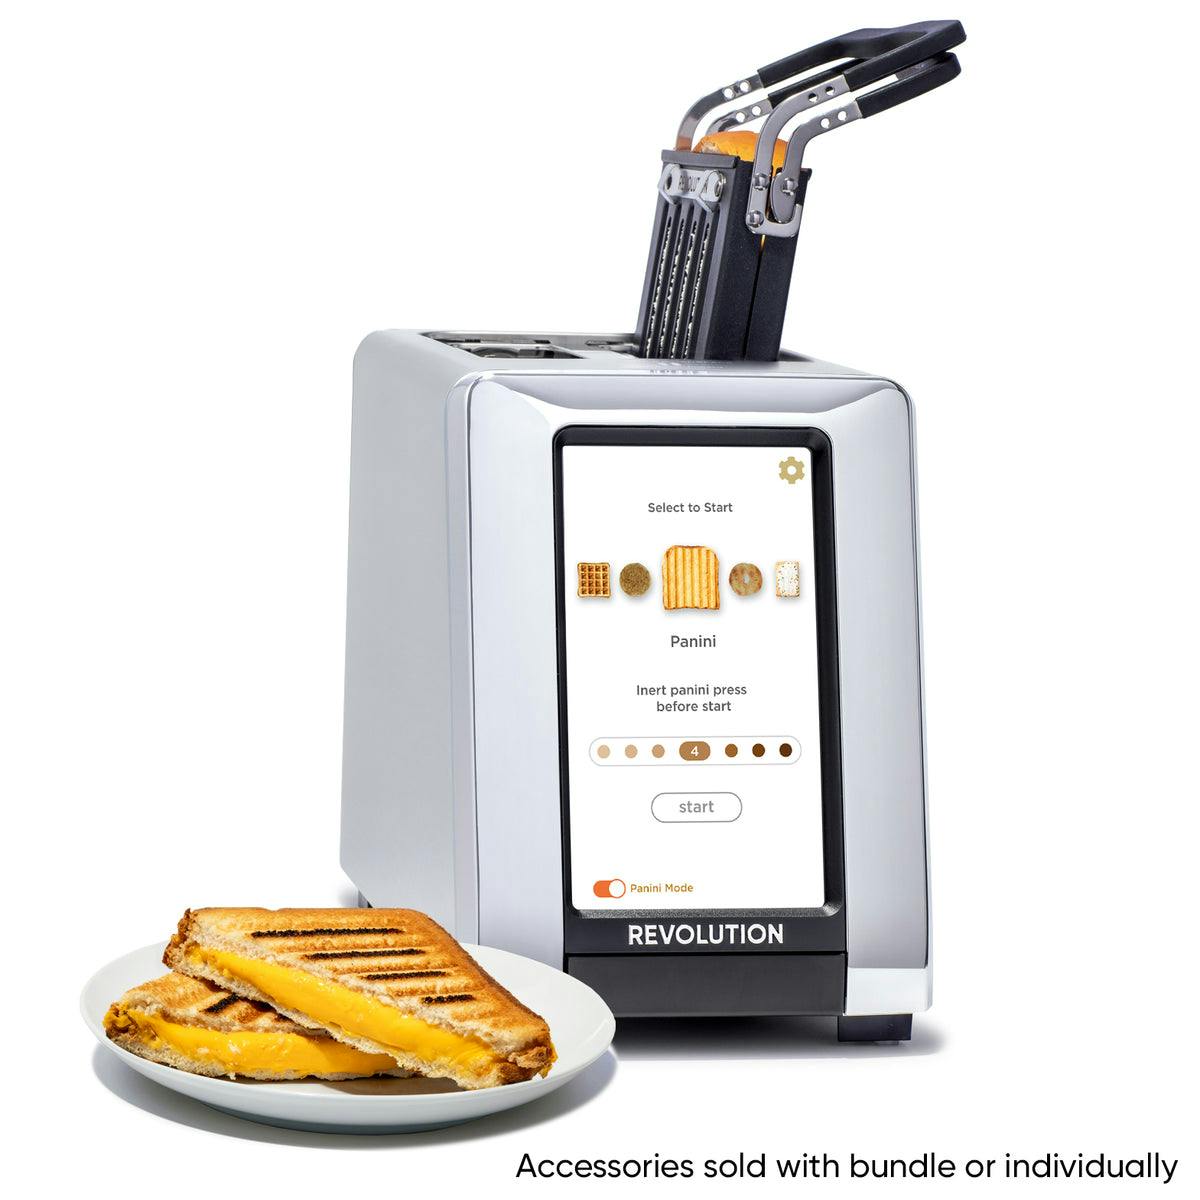 Revolution InstaGLO® R180 Toaster